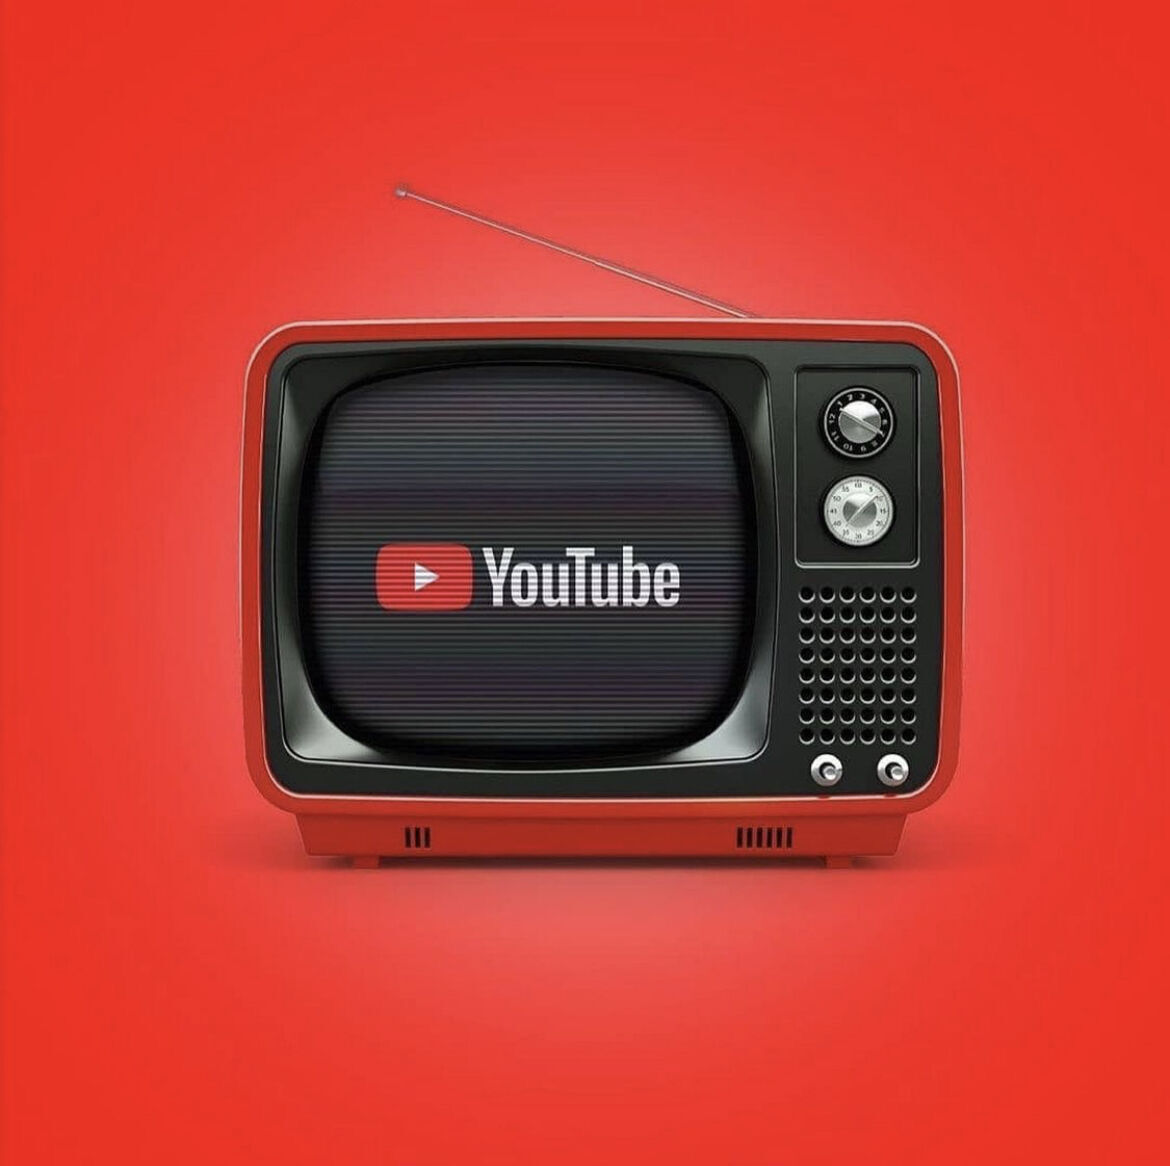 YouTube in retro